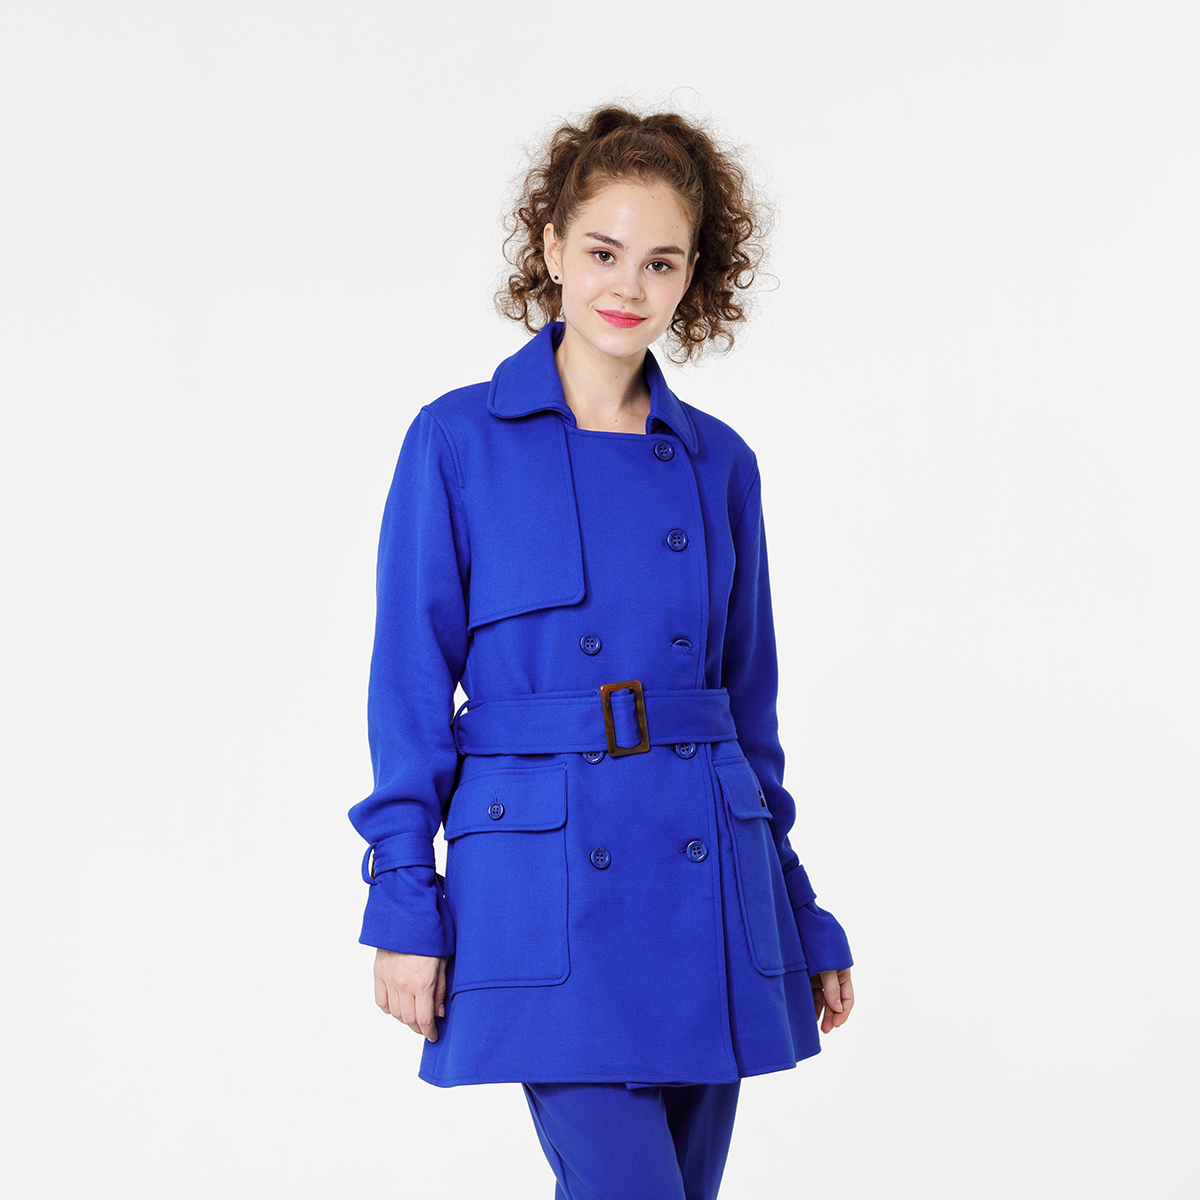 Royar blue Lady's coat